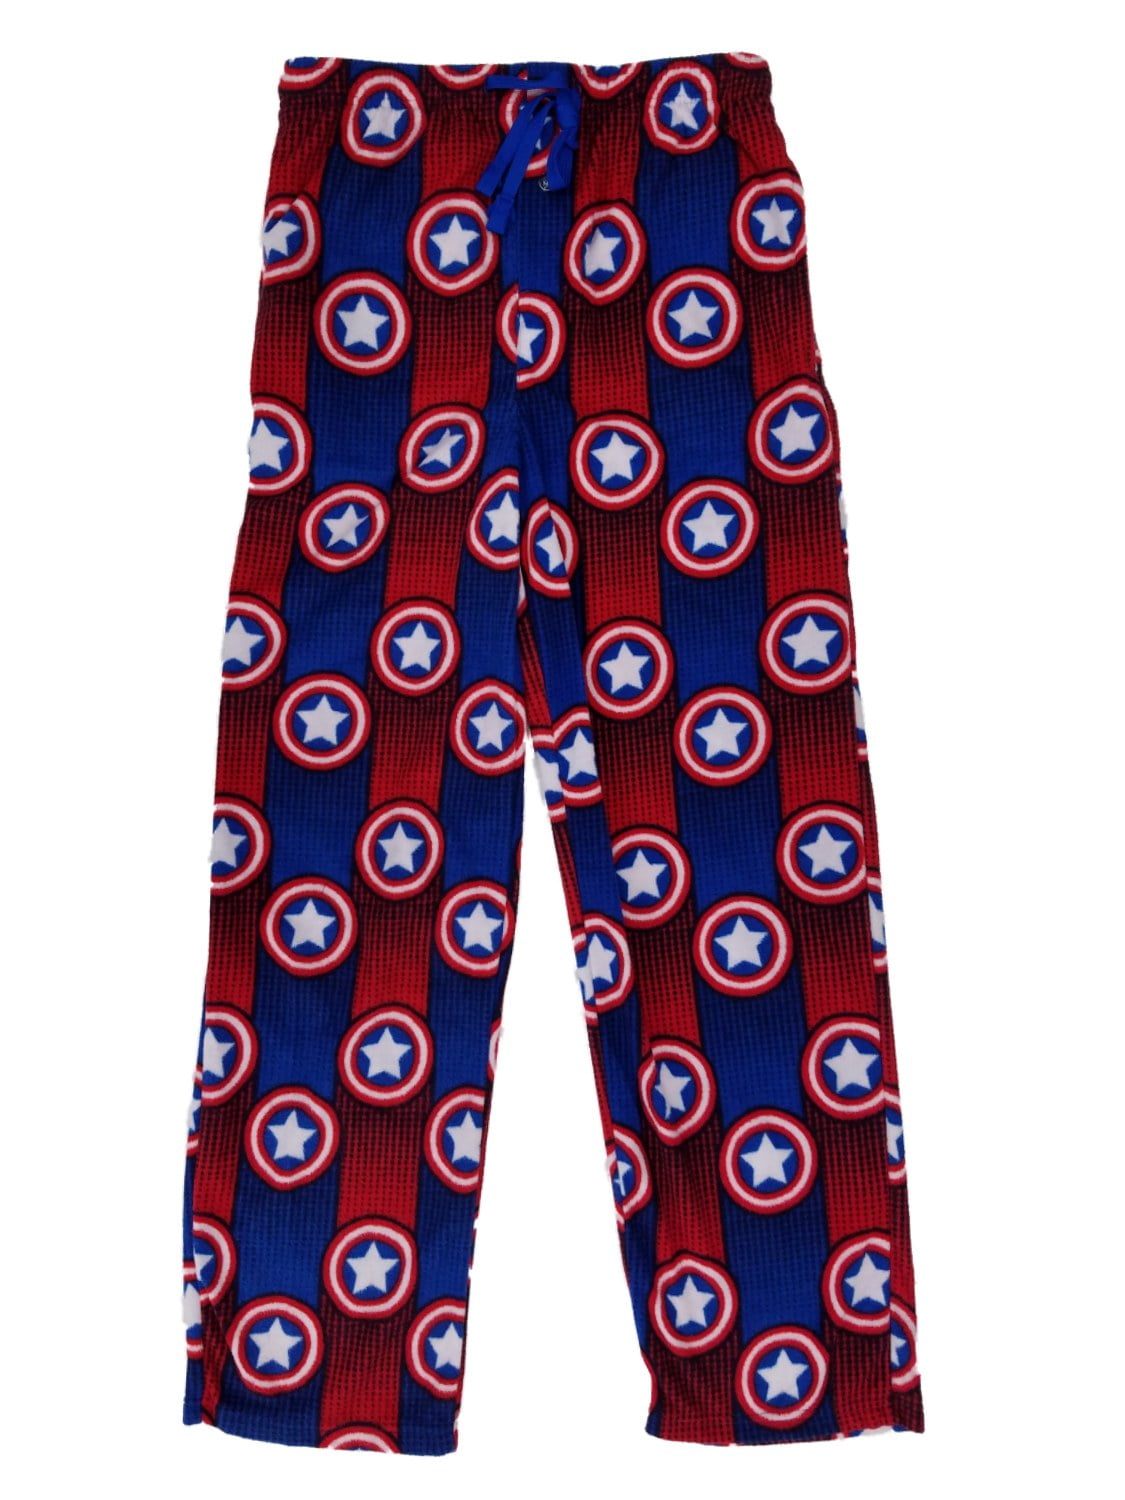 Captain Marvel  Men’s Lounge Pants Pajama New 